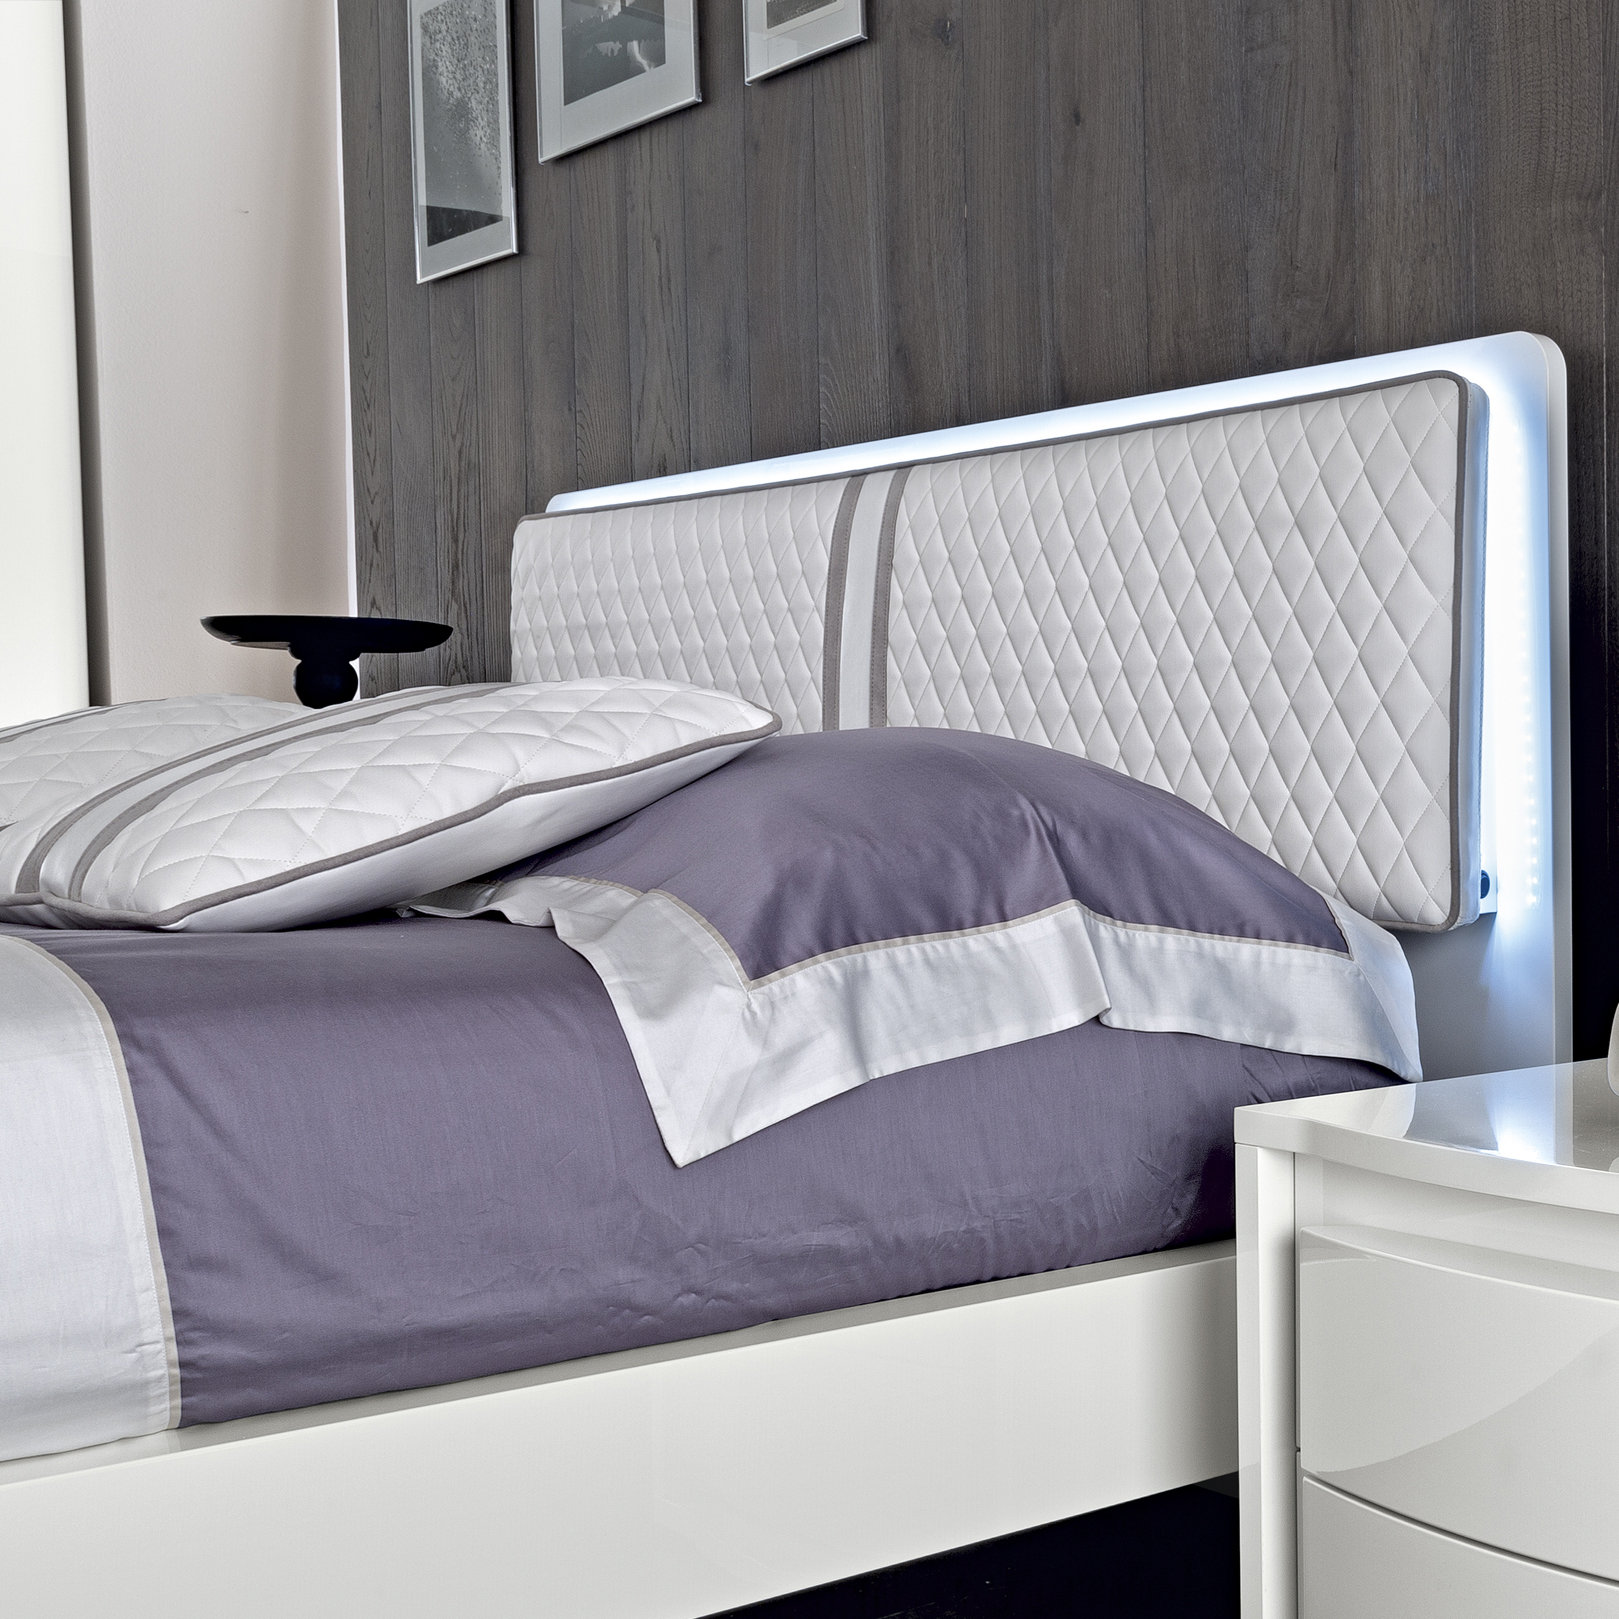 Bianca Rombi Leather 6ft White LED Bed